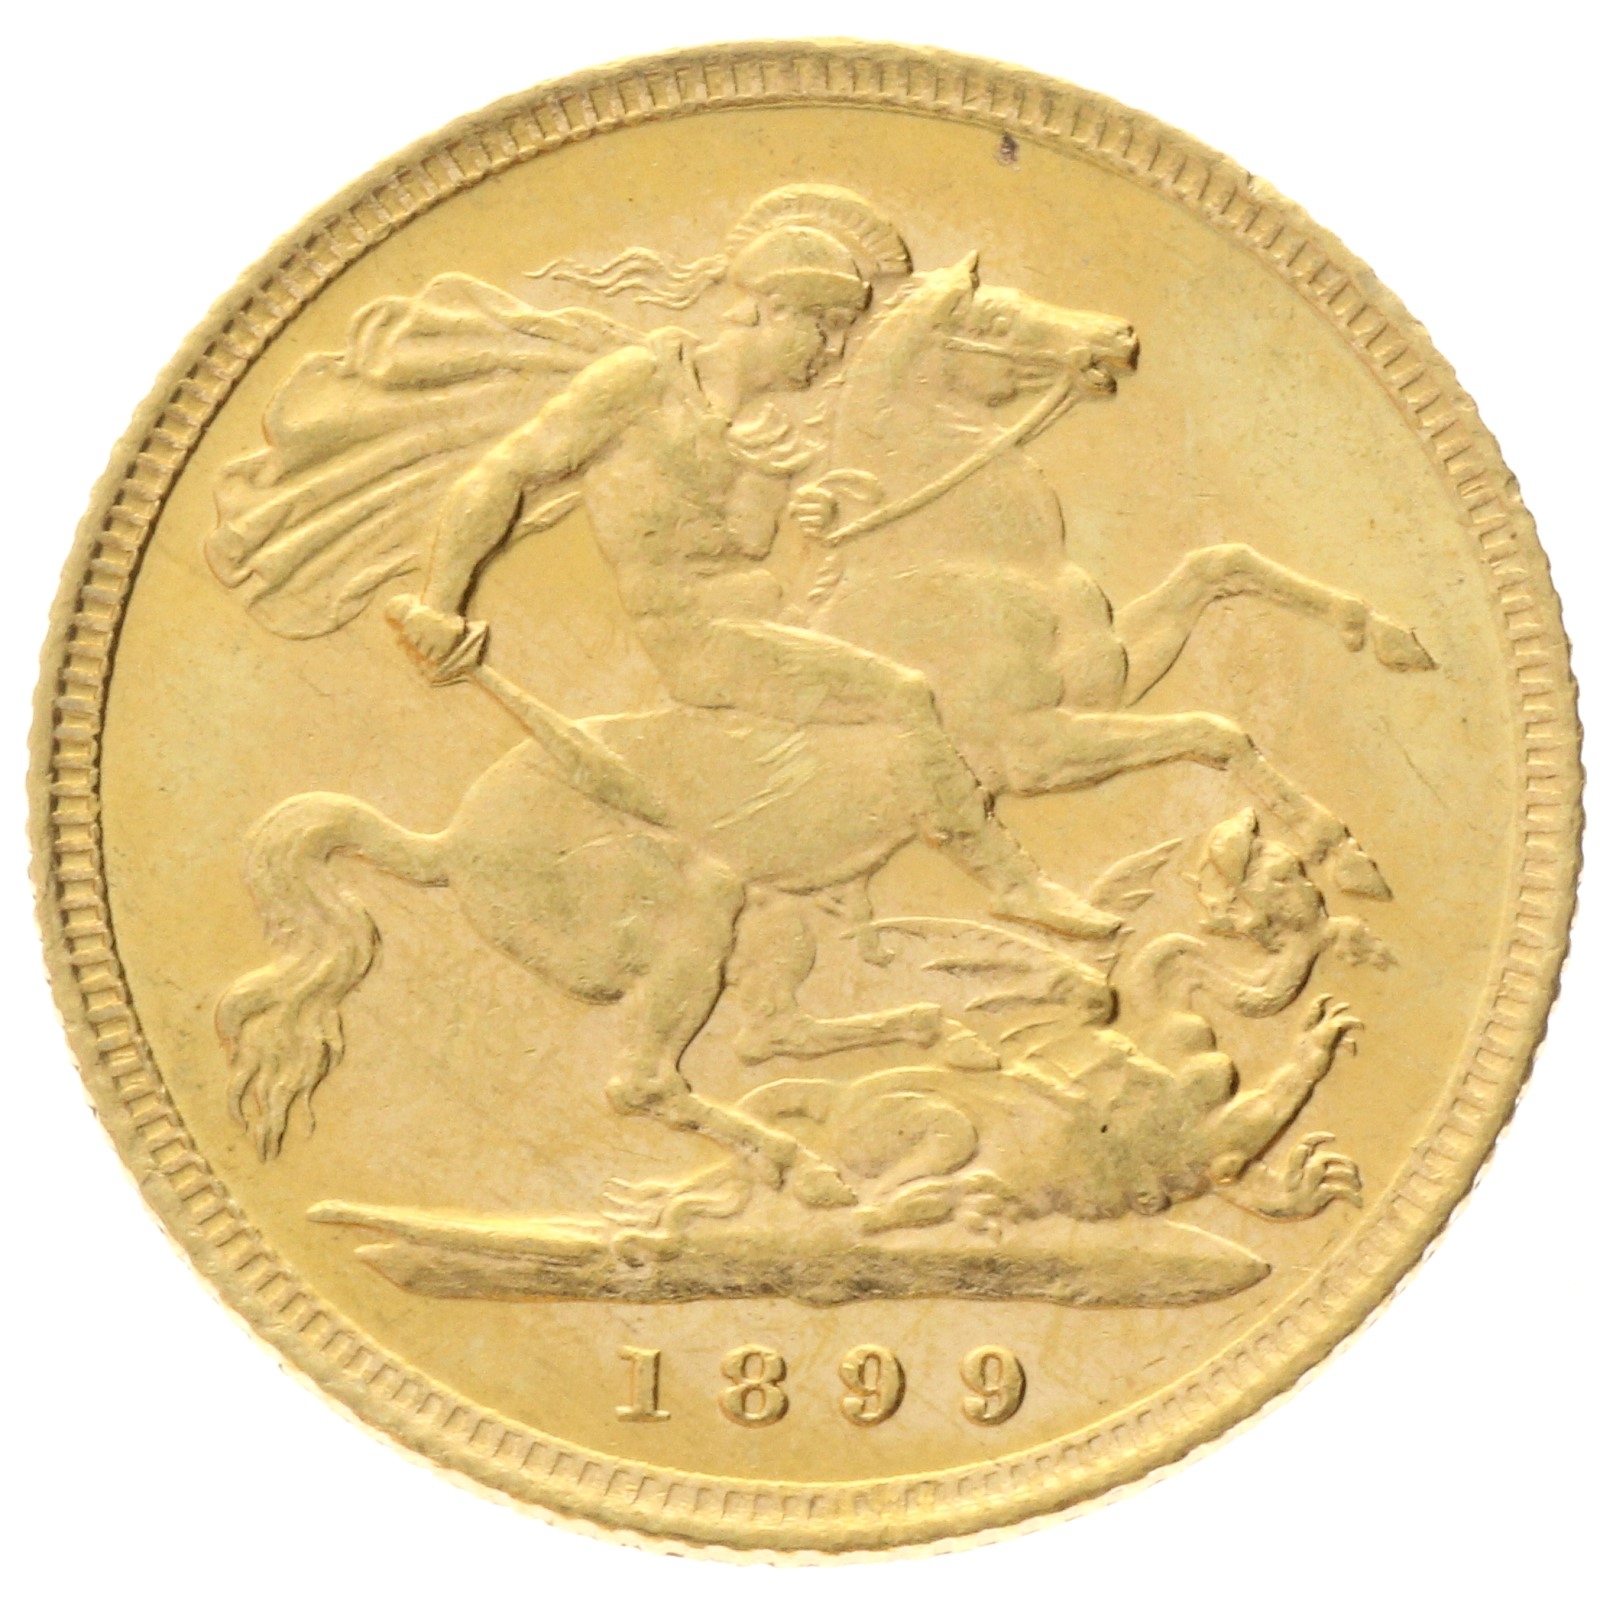 Great Britain - 1/2 sovereign - 1899 - Victoria